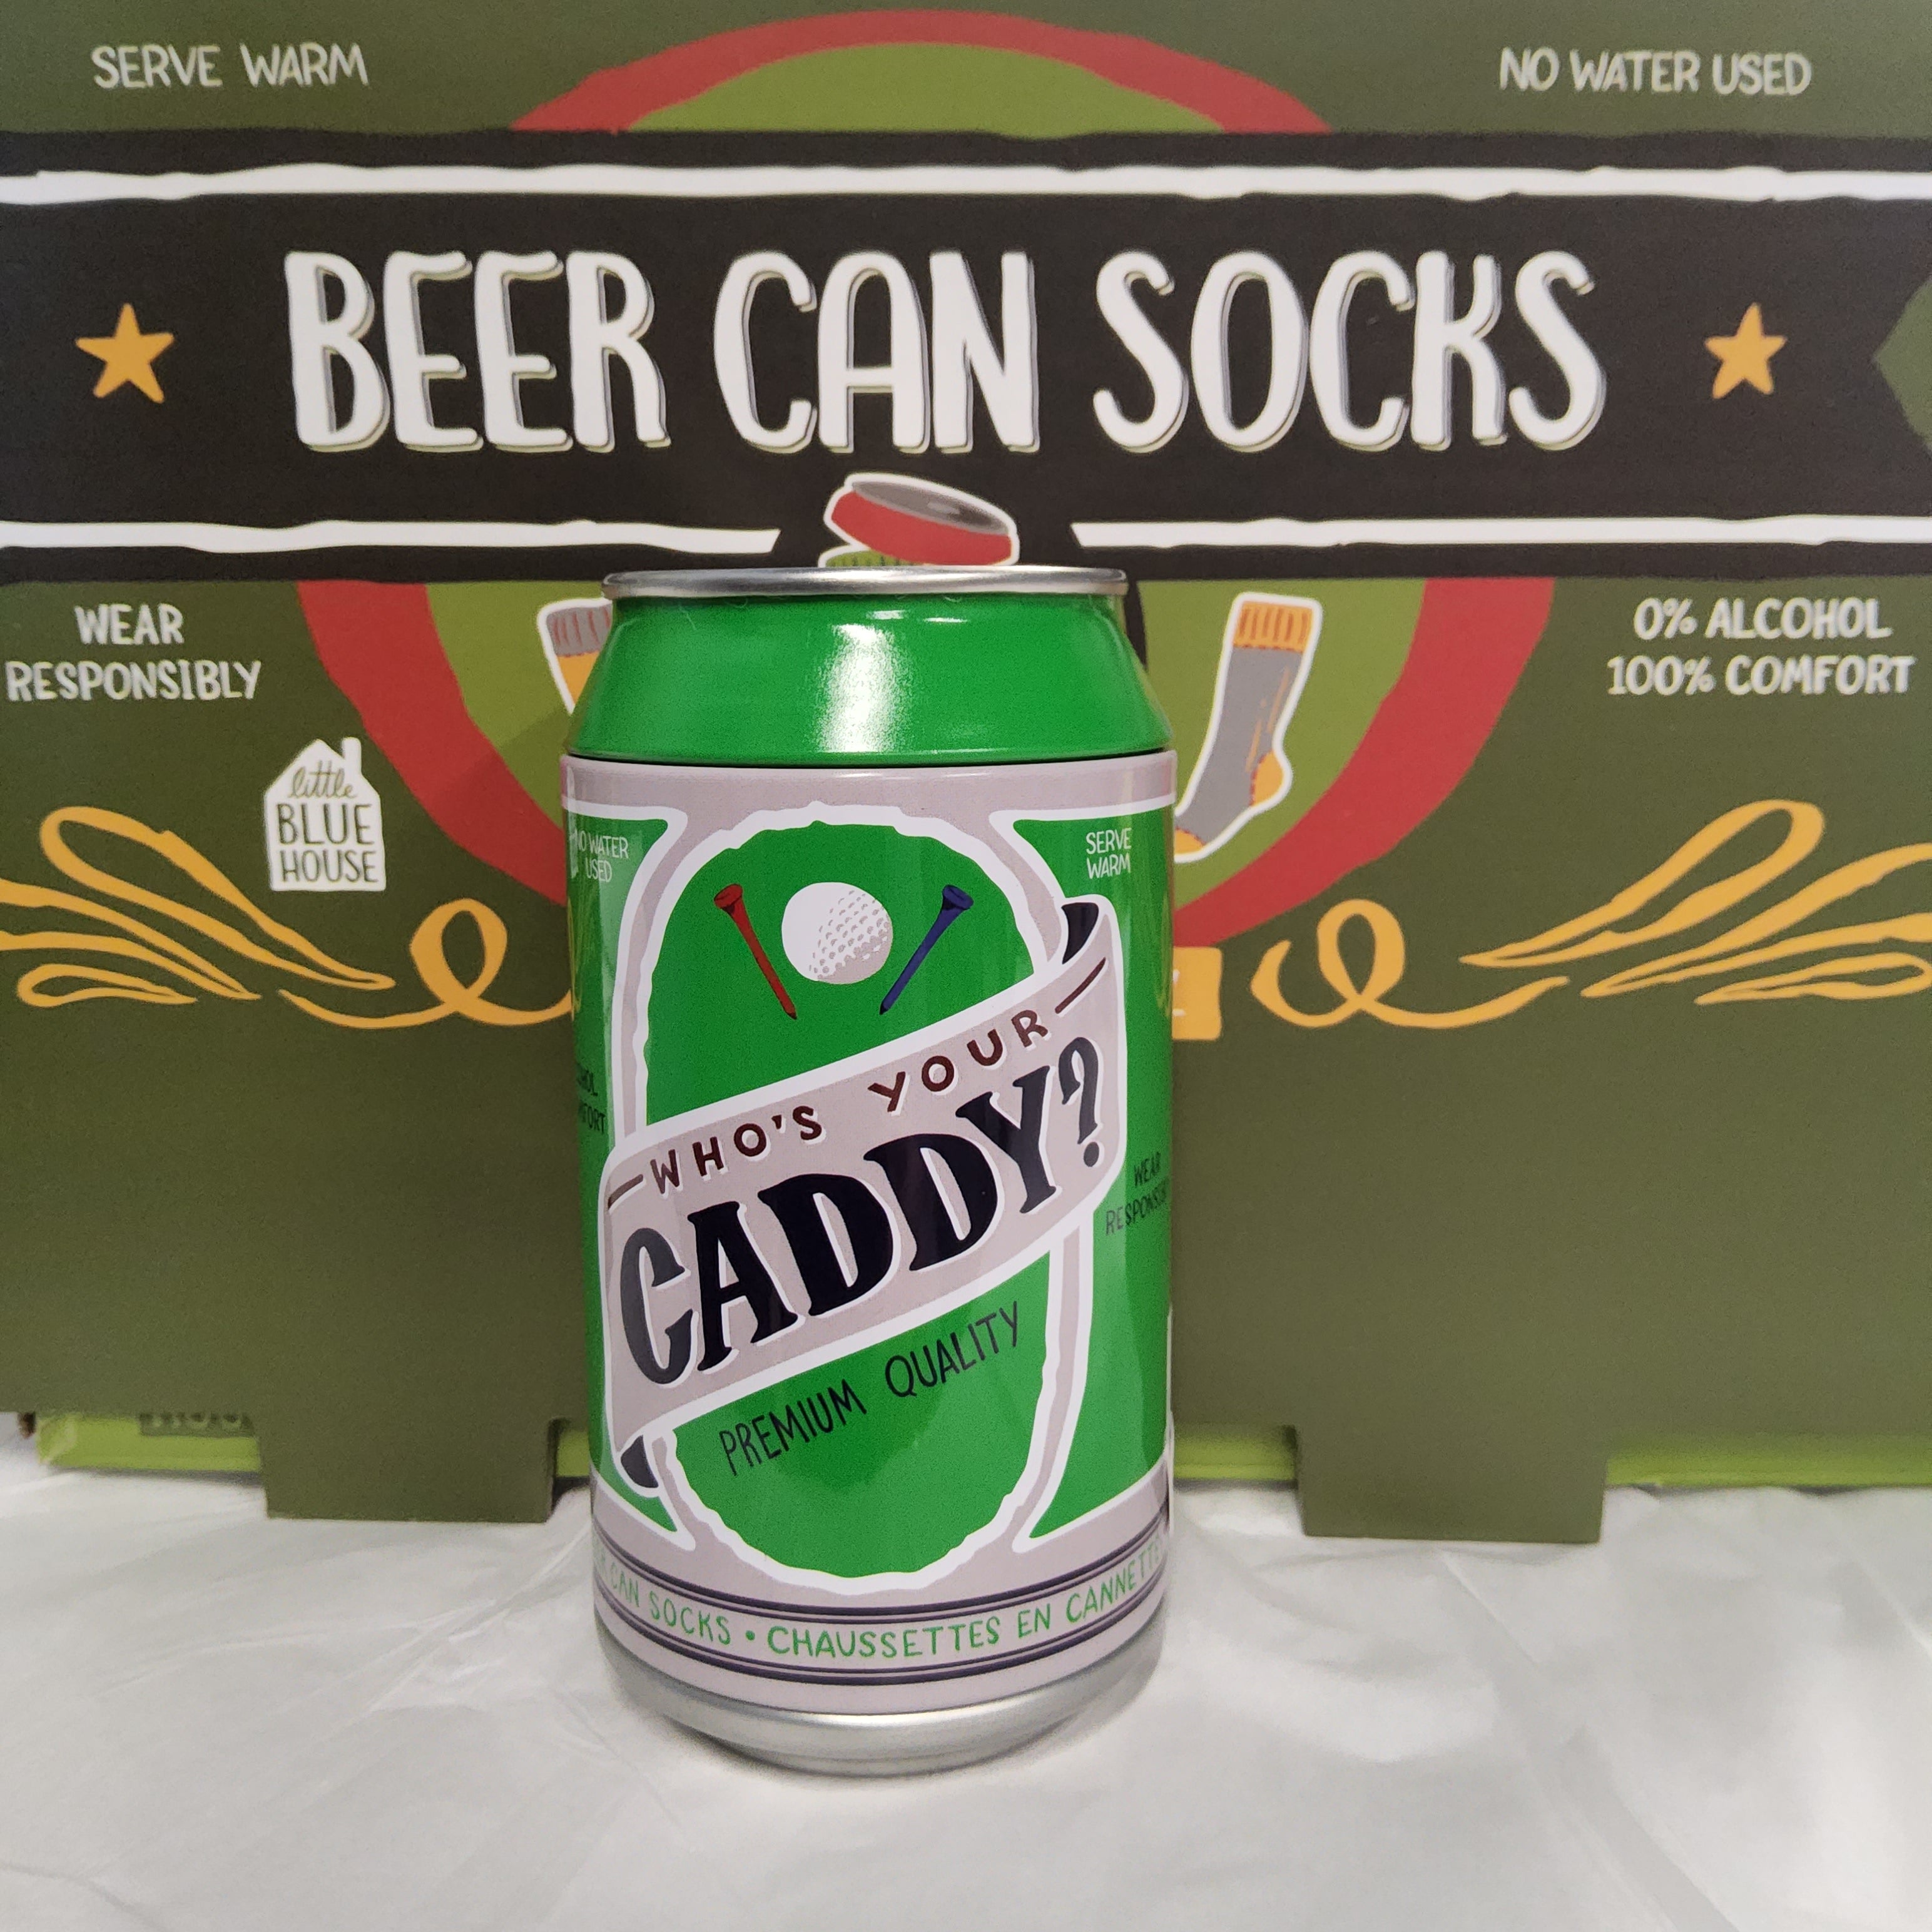 Beer Can Socks - Assorted designs